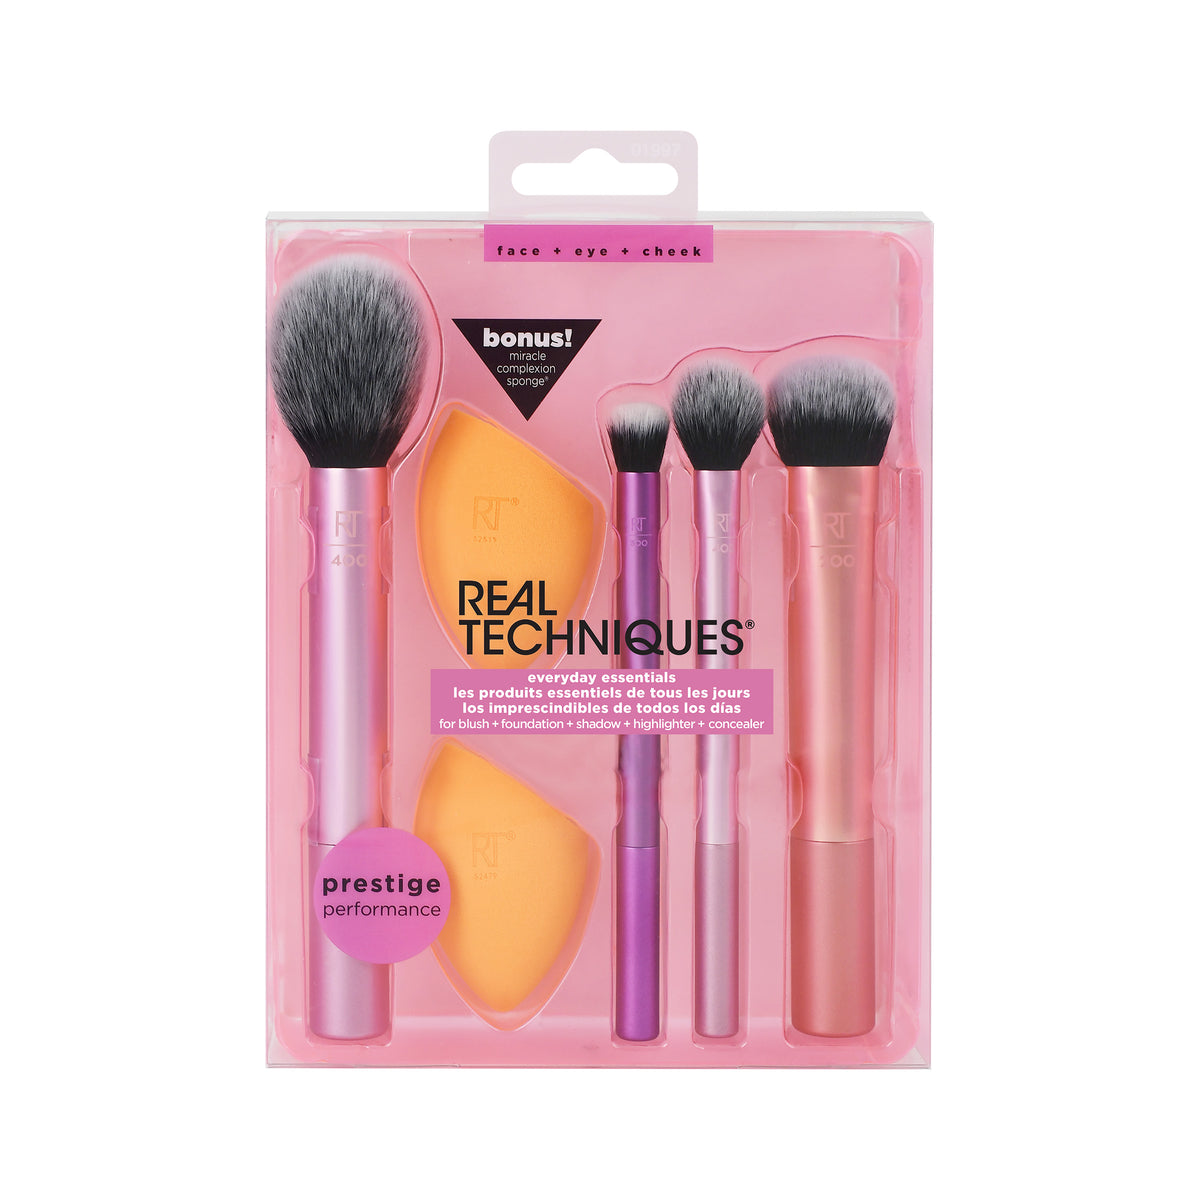 Odysseus Verstrooien lengte Real Techniques Makeup Brush Set with 2 Sponge Blenders for Eyeshadow,  Foundation, Blush, and Concealer, 6 Piece Makeup Brush Set | RealTechniques .com